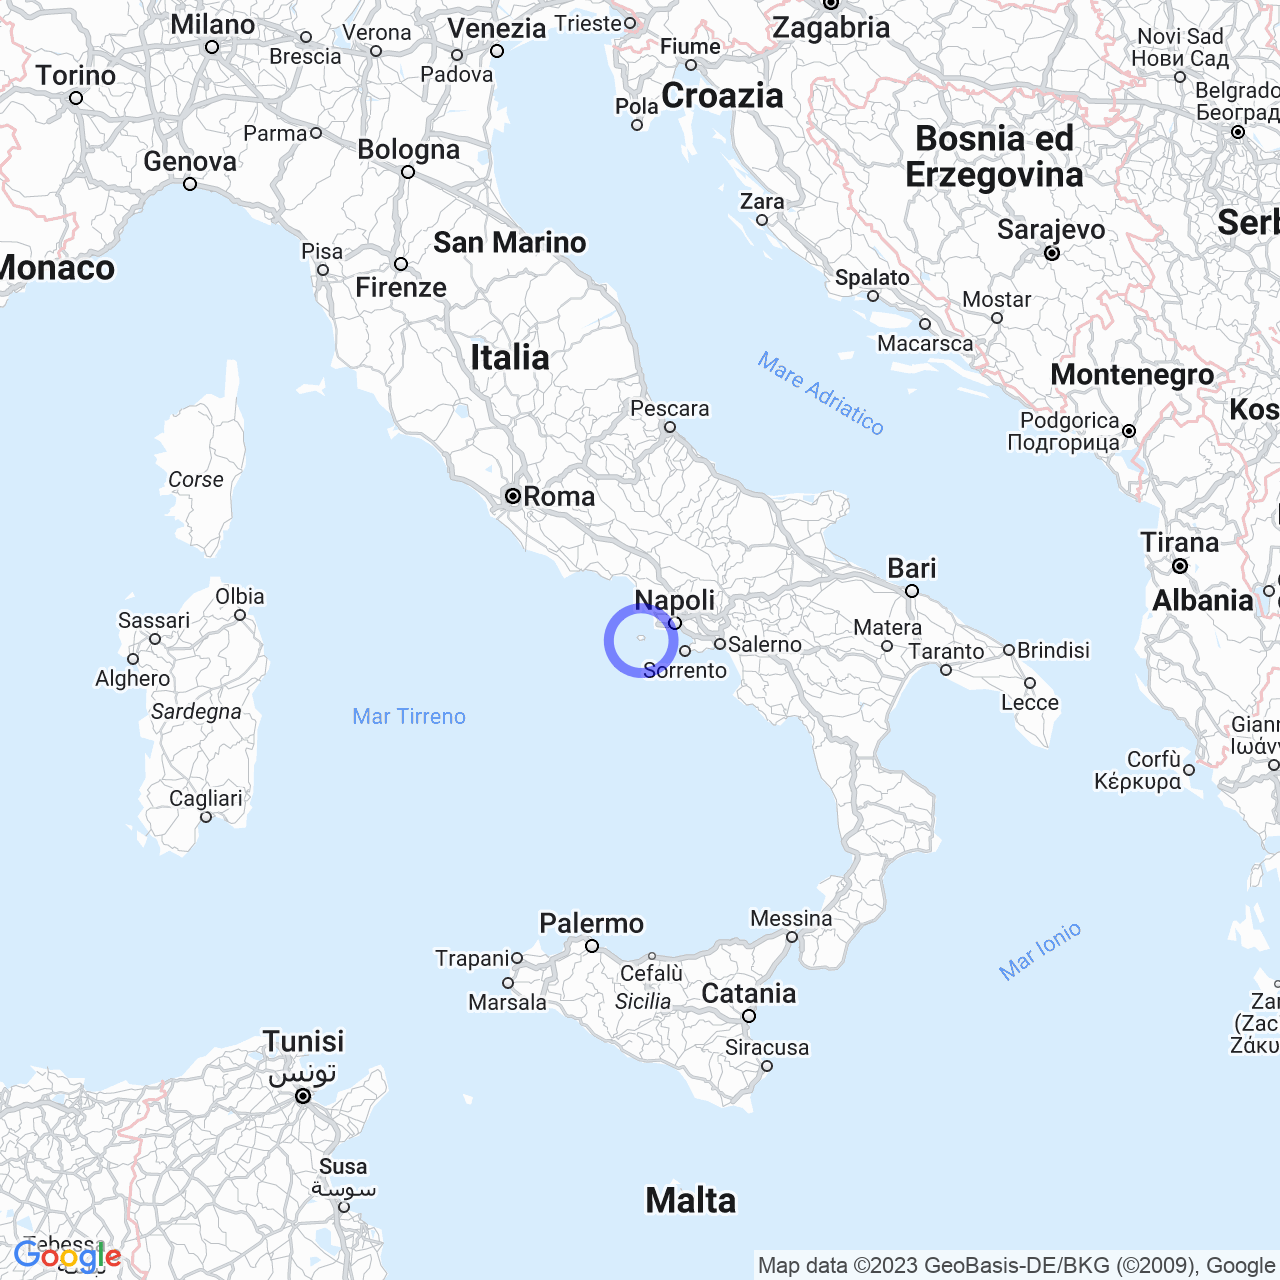 Serrara Fontana: A pearl of history and nature on Ischia